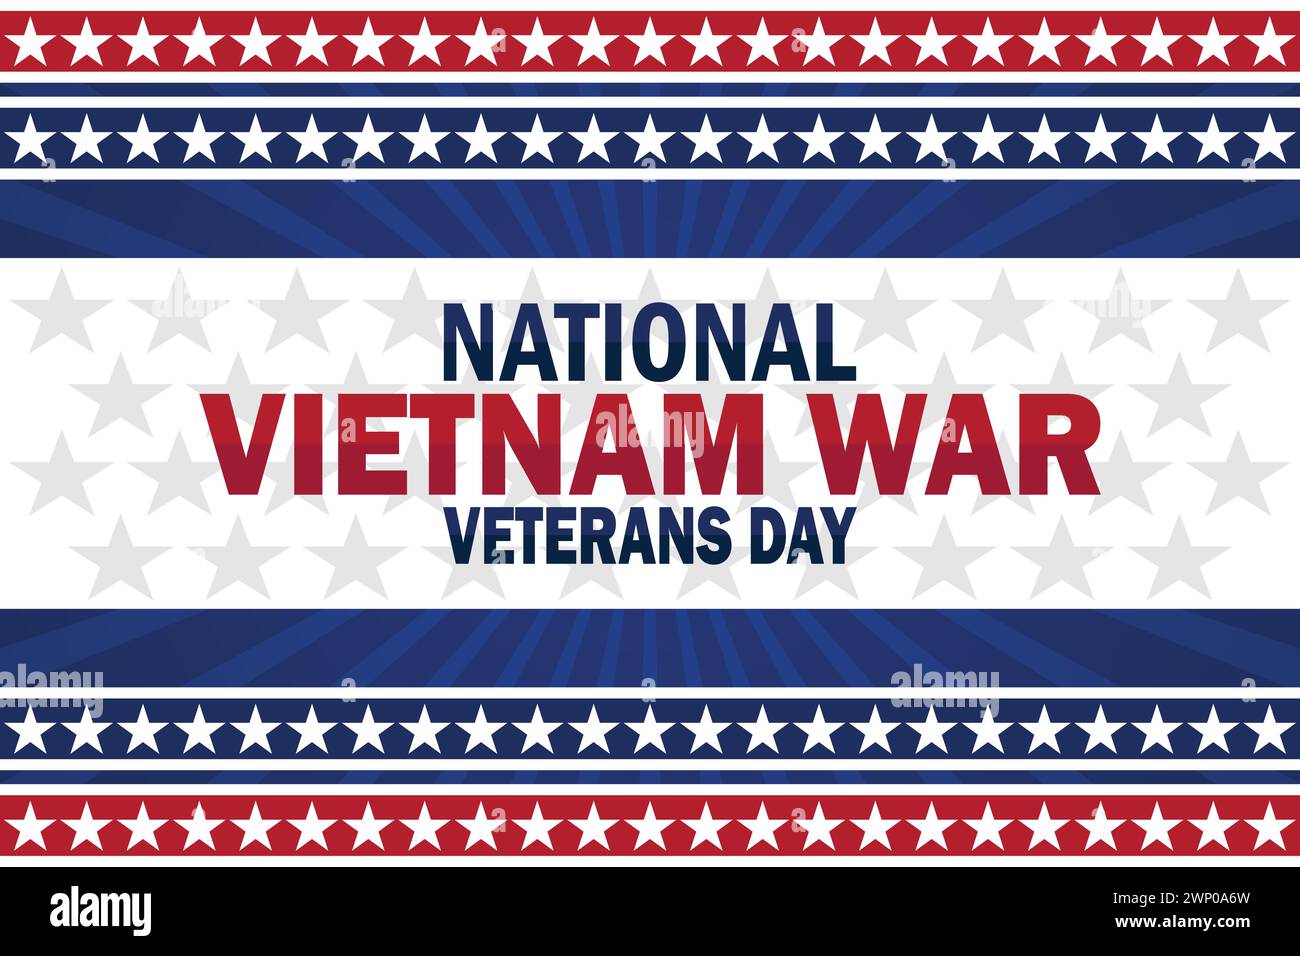 National Vietnam War Veterans Day wallpaper with typography. National Vietnam War Veterans Day, background Stock Vector